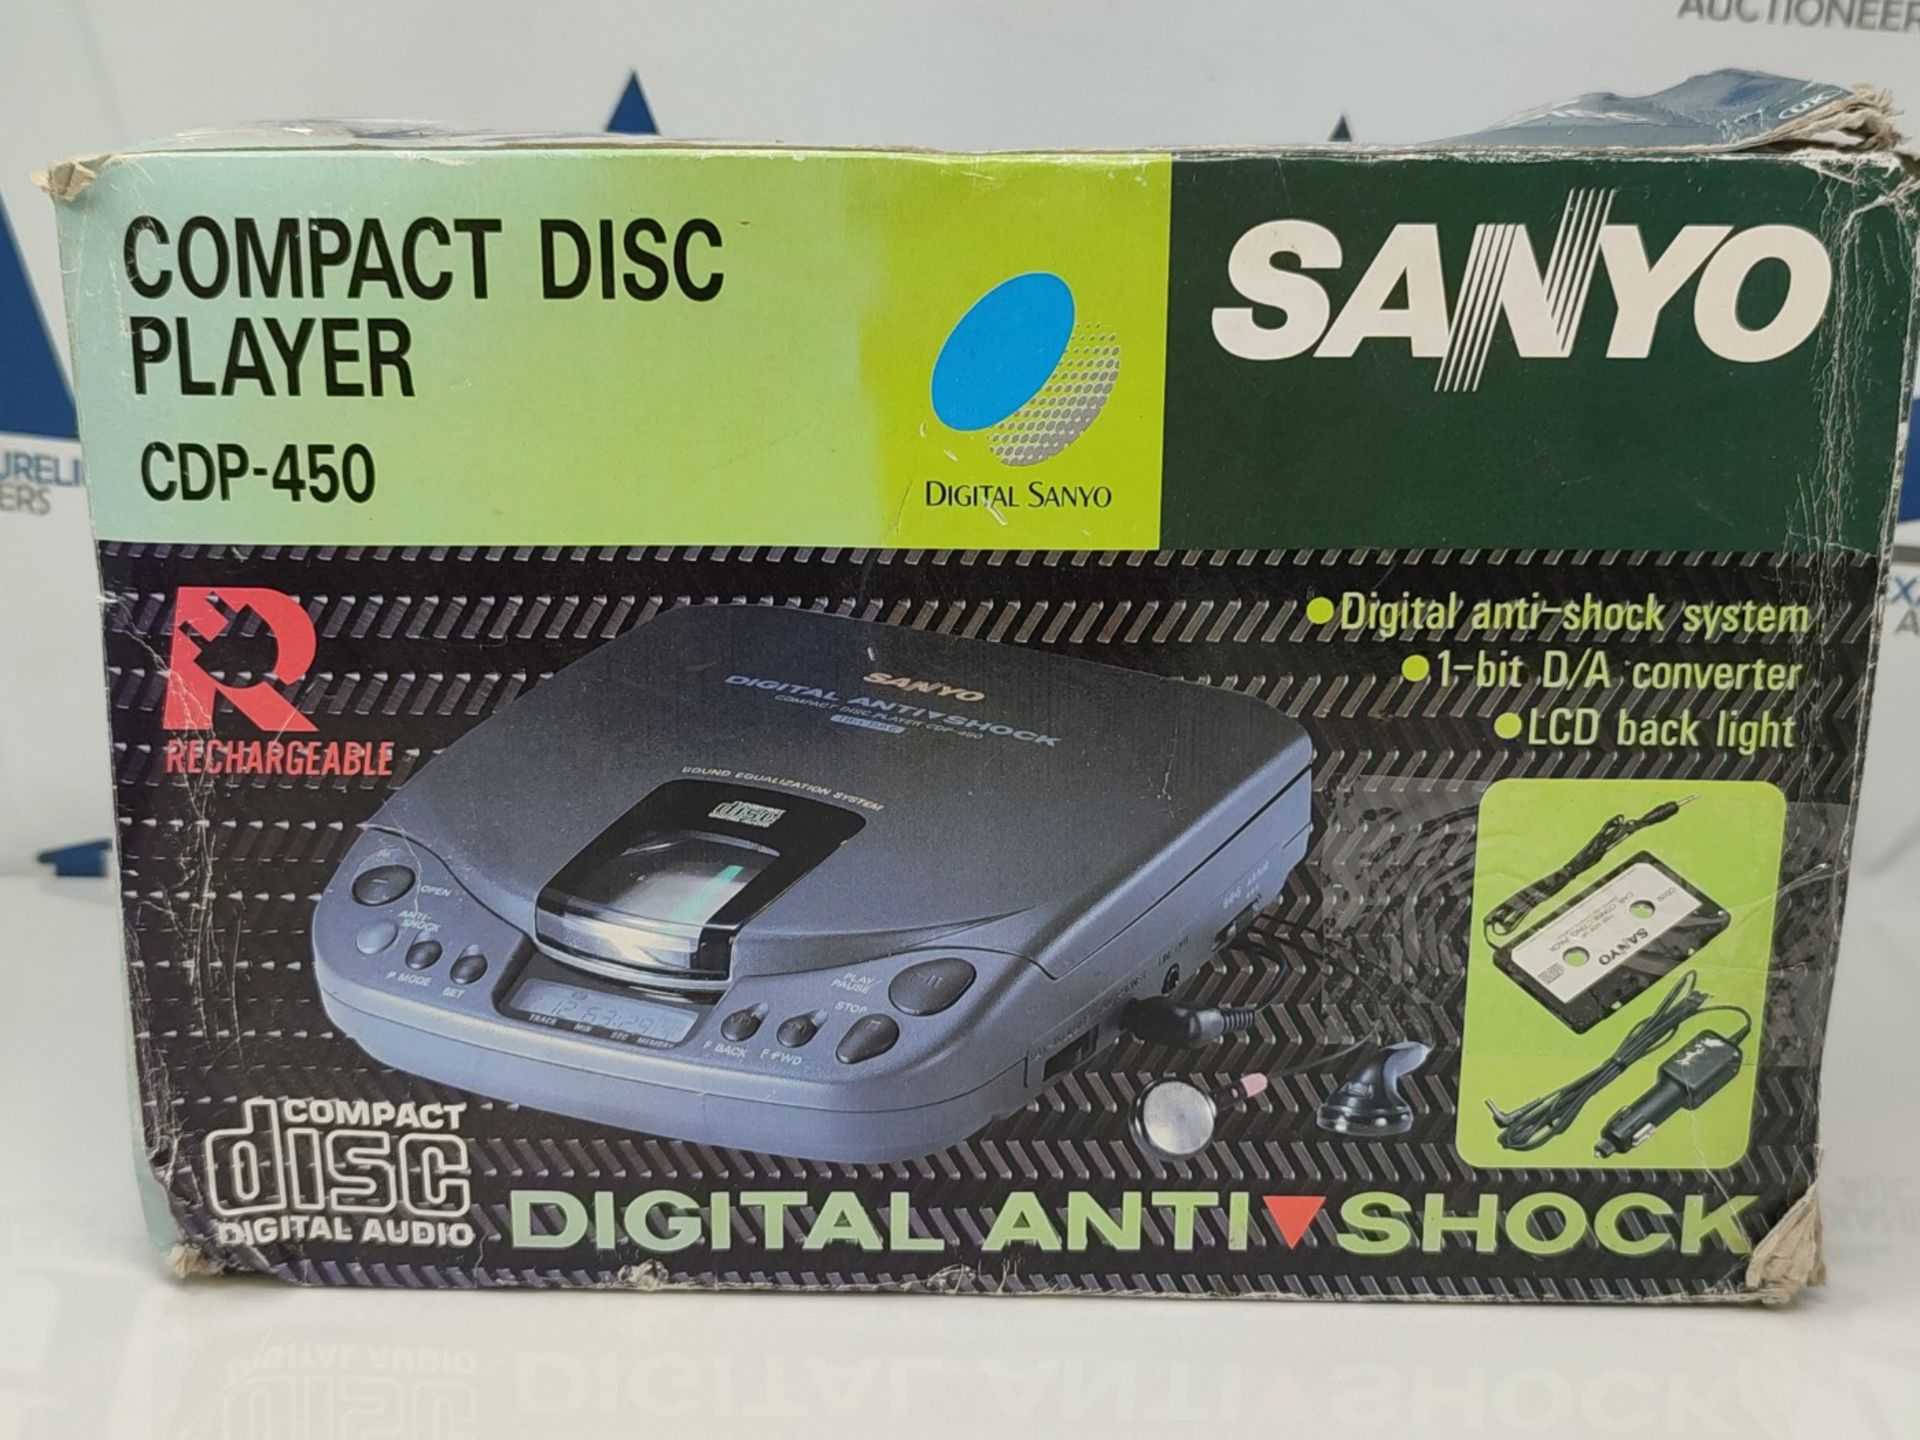 Sanyo CDP-450 Digital Audio Compact Disc Player CD